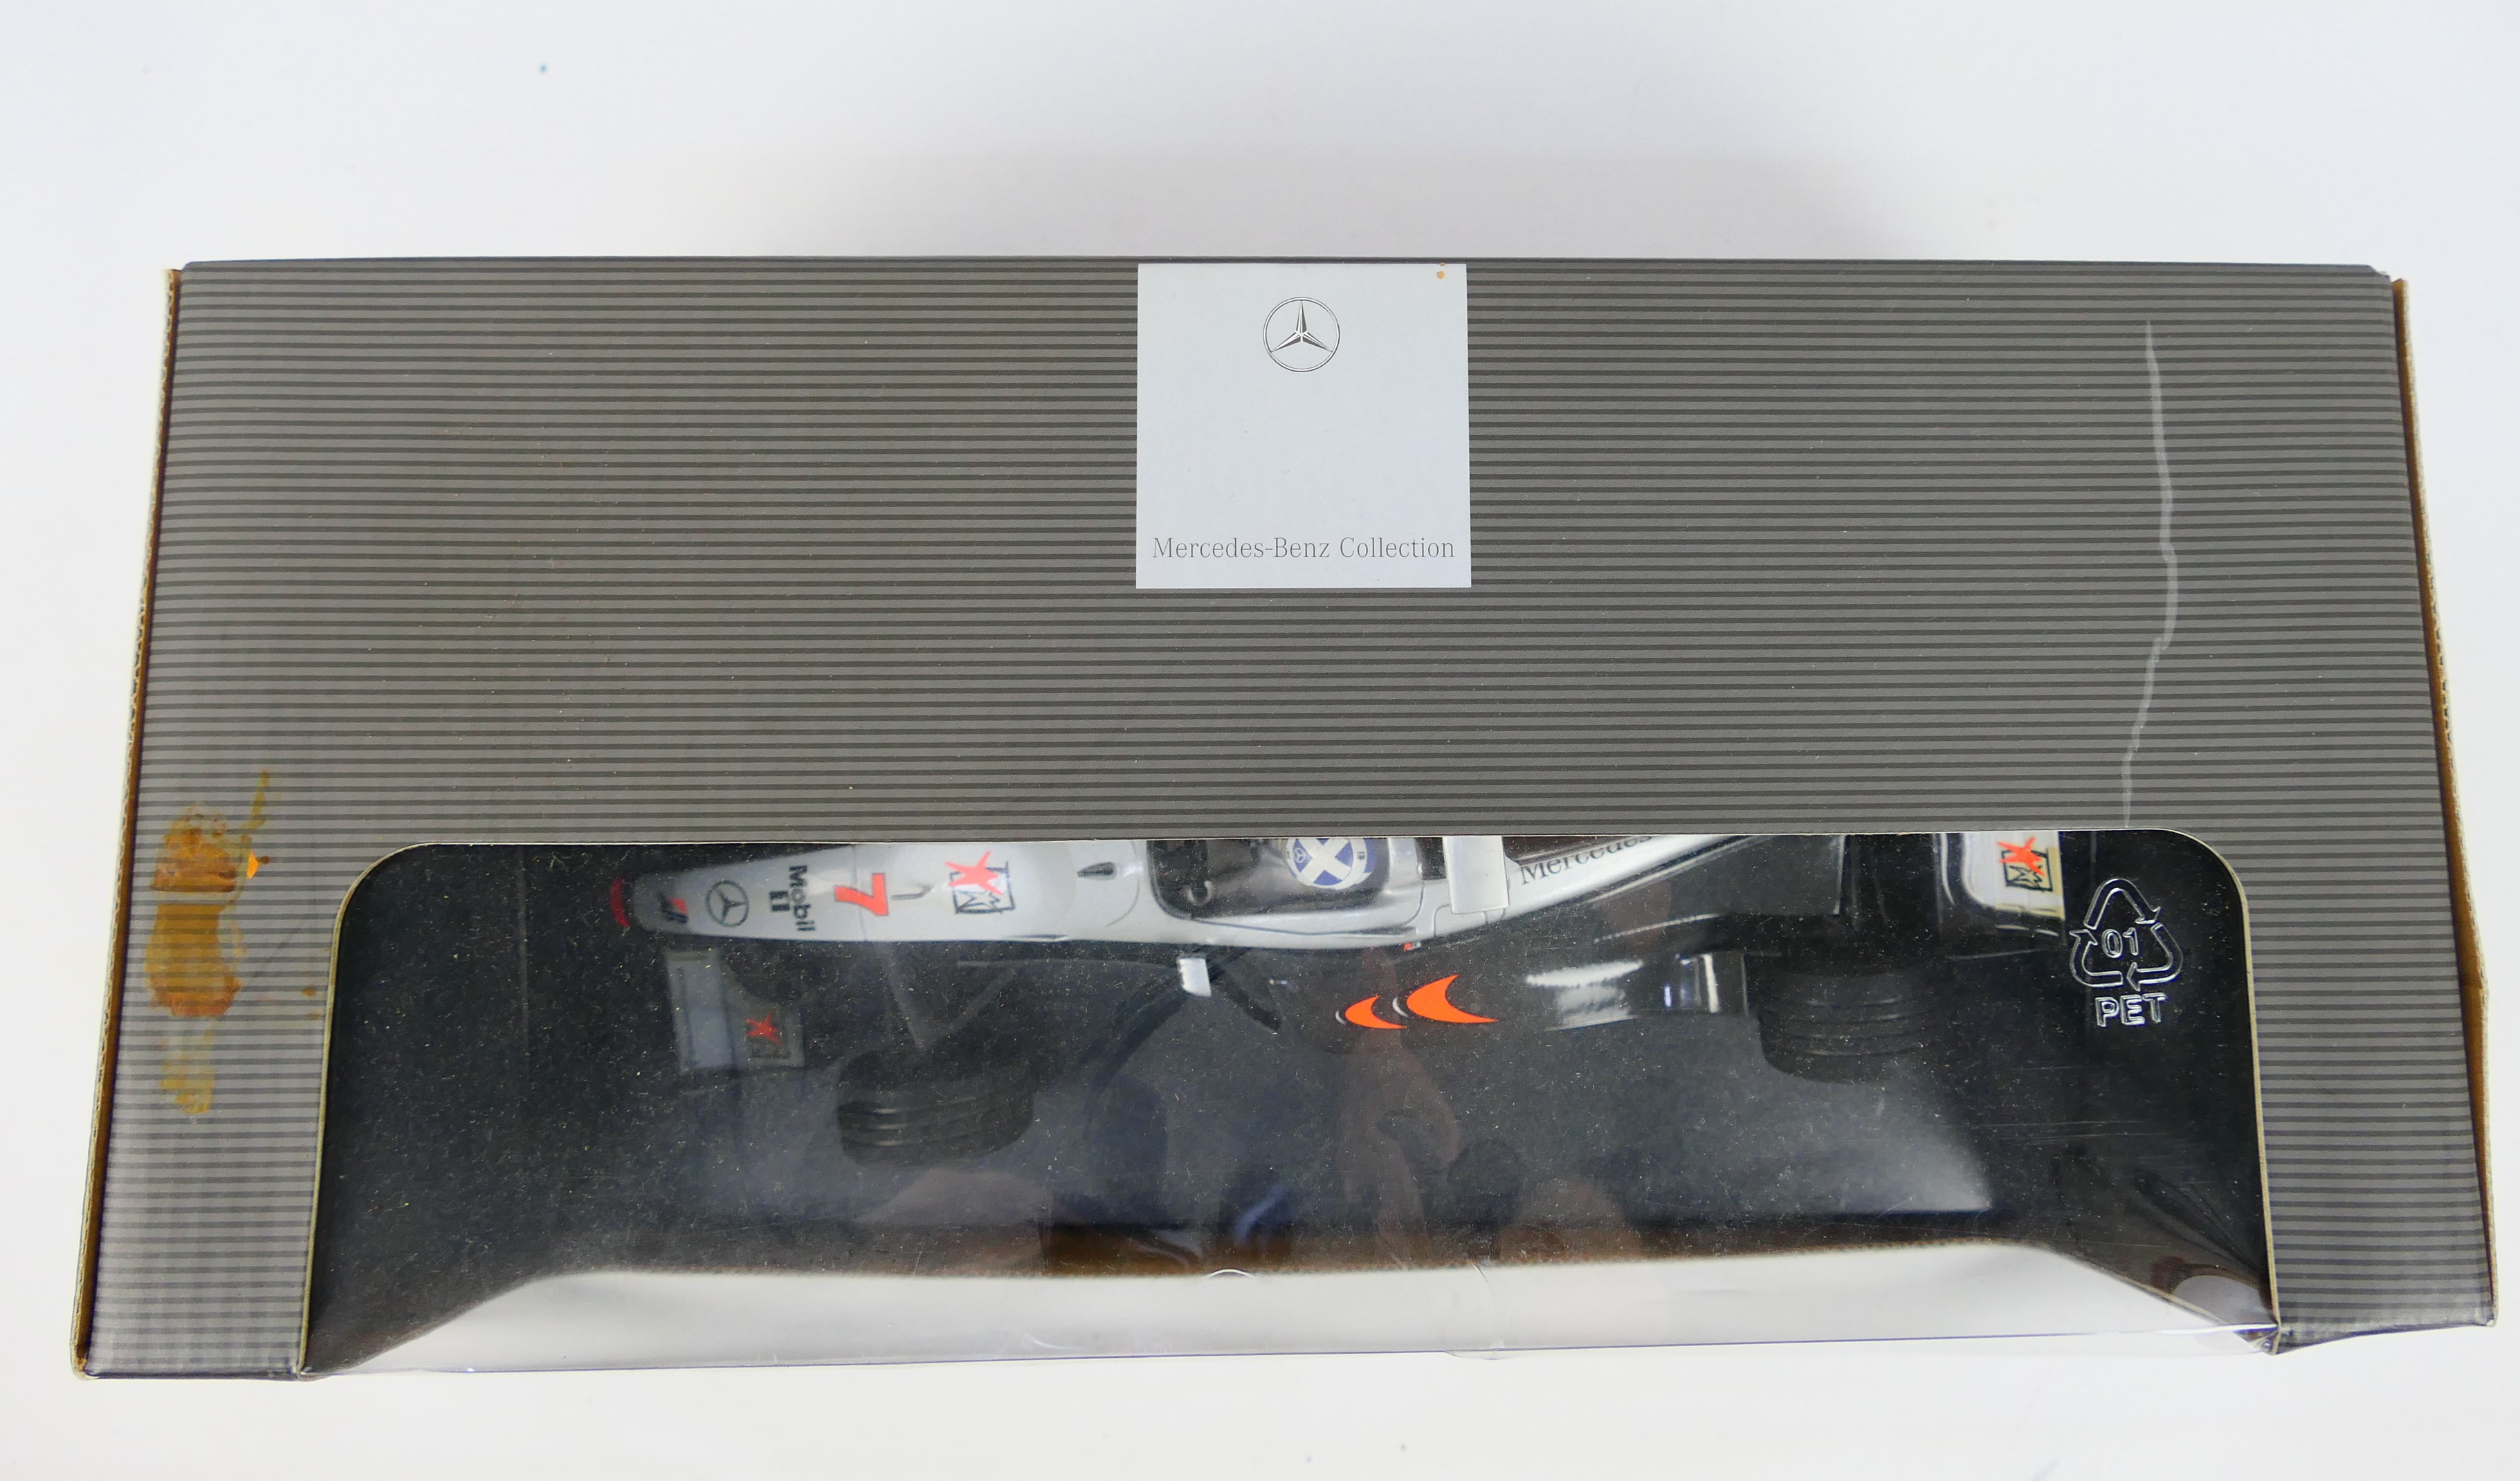 Minichamps - A boxed 1:18 scale Minichamps B6 6960220 diecast McLaren Mercedes F1 Racing Car, - Image 6 of 12